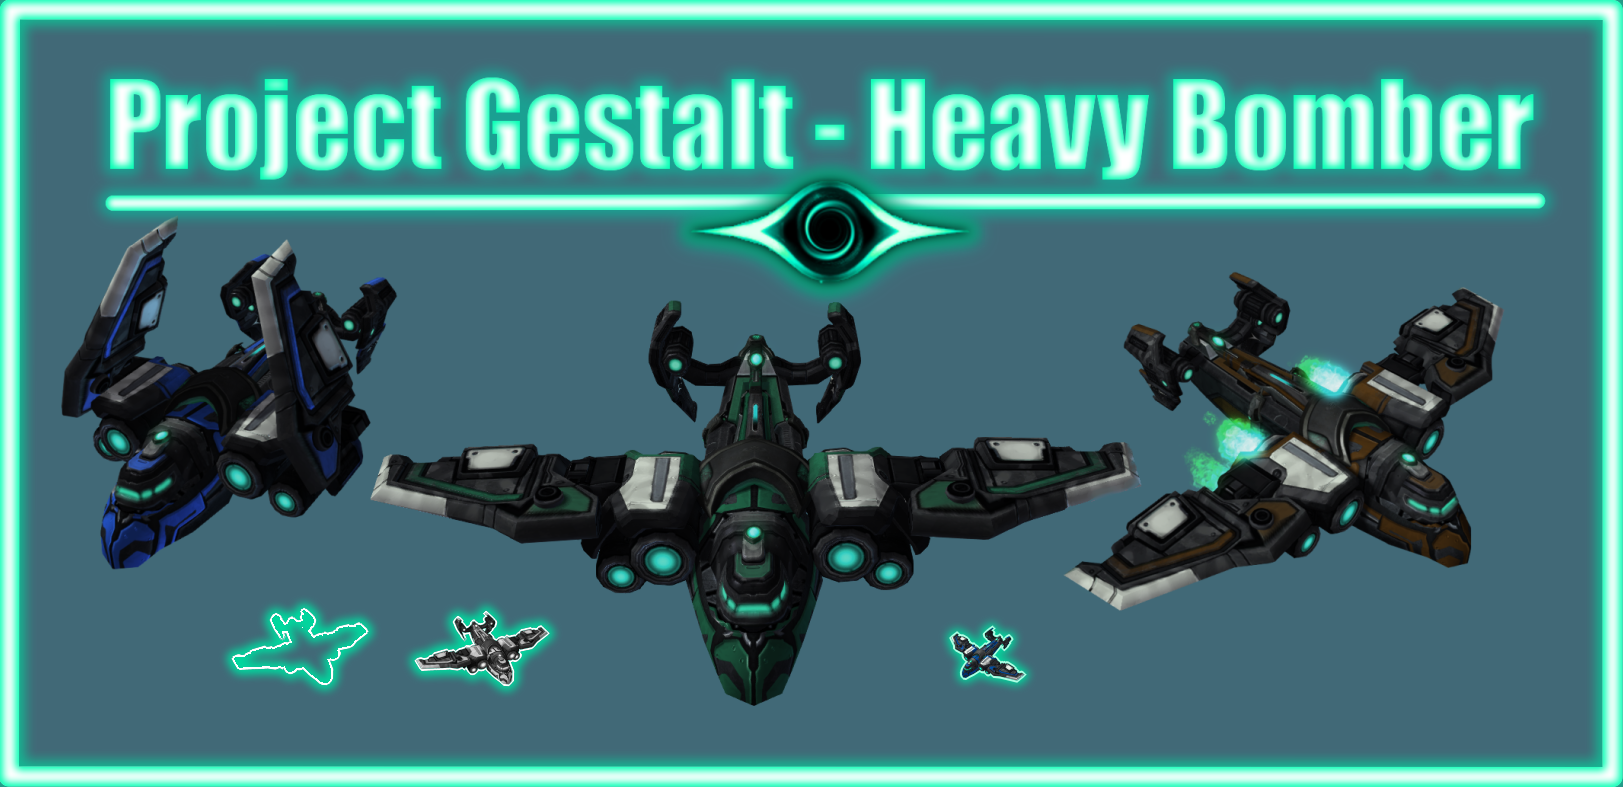 Project Gestalt - Heavy Bomber